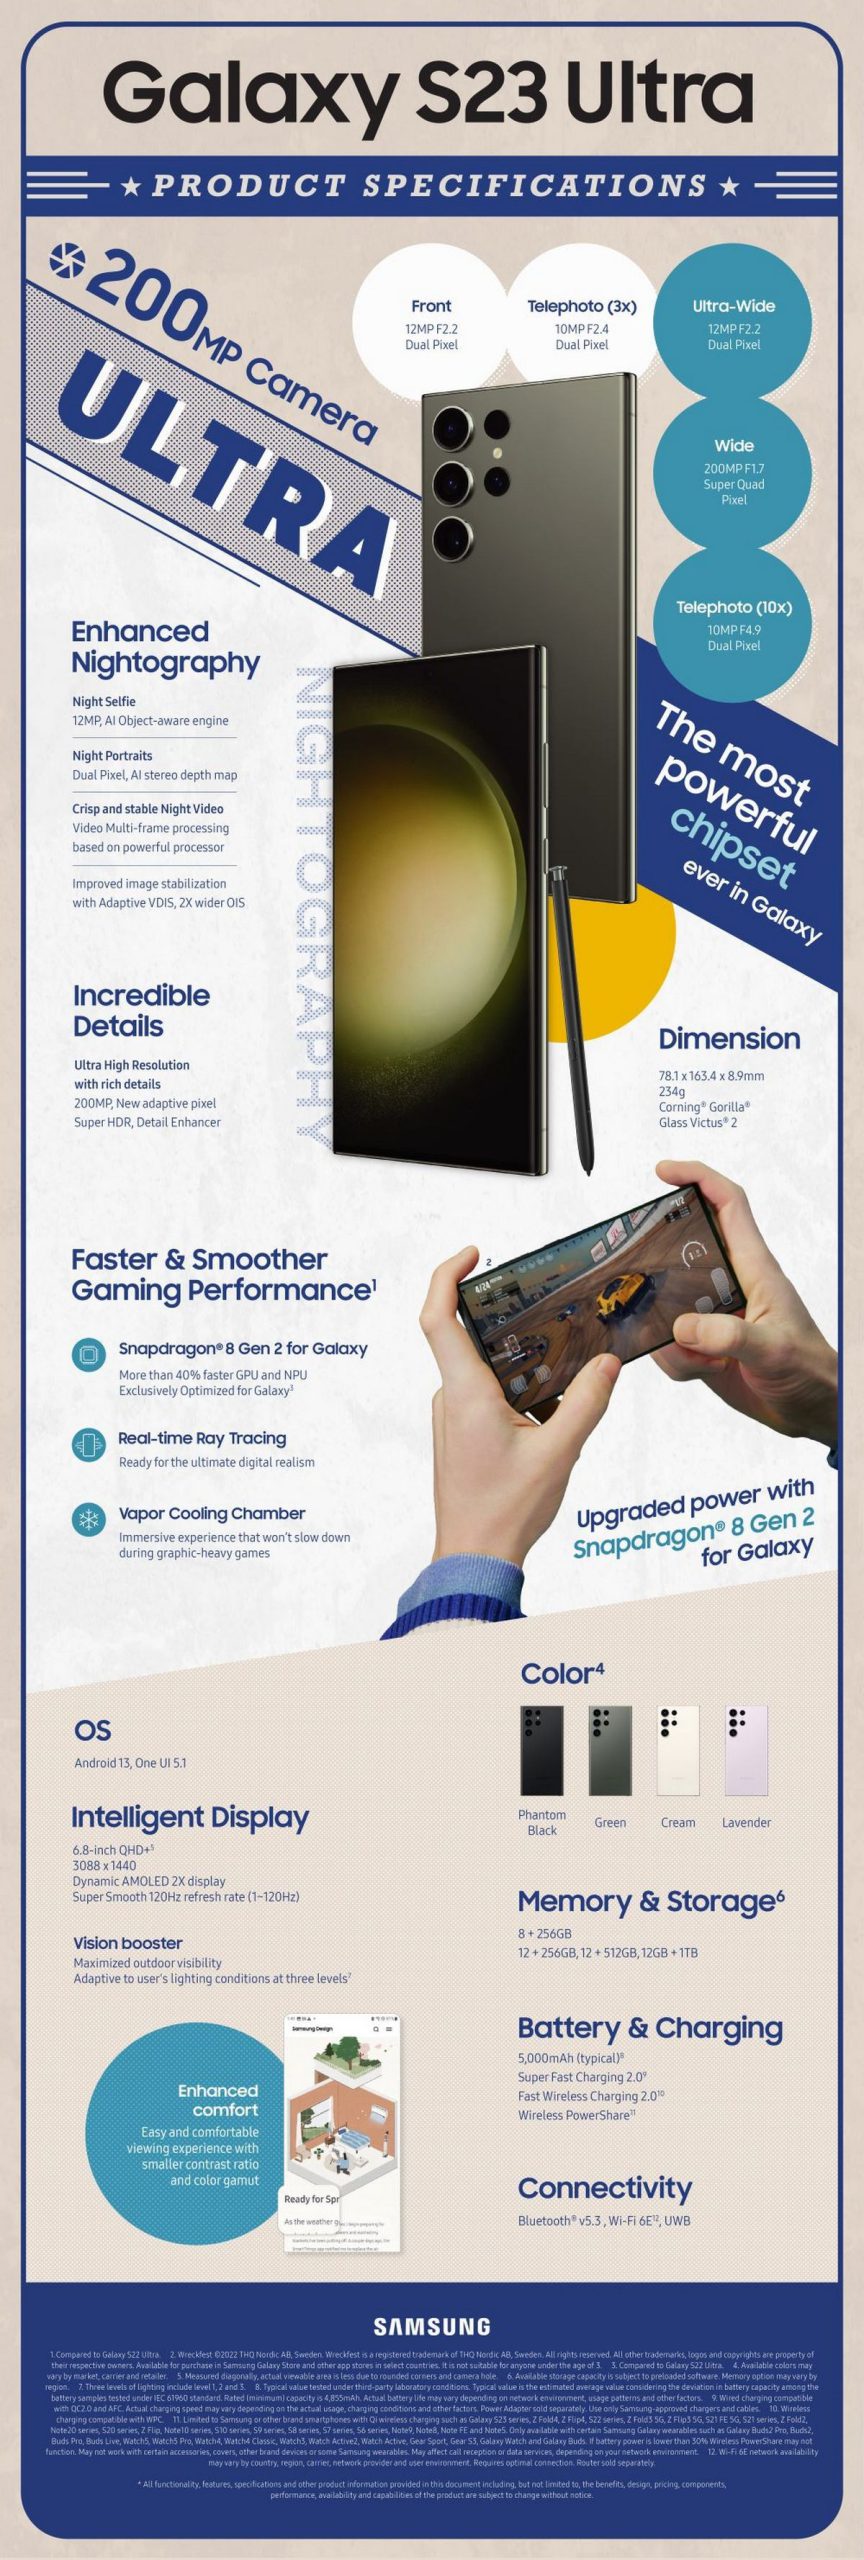 Samsung Galaxy S23 Ultra InfoGraphic